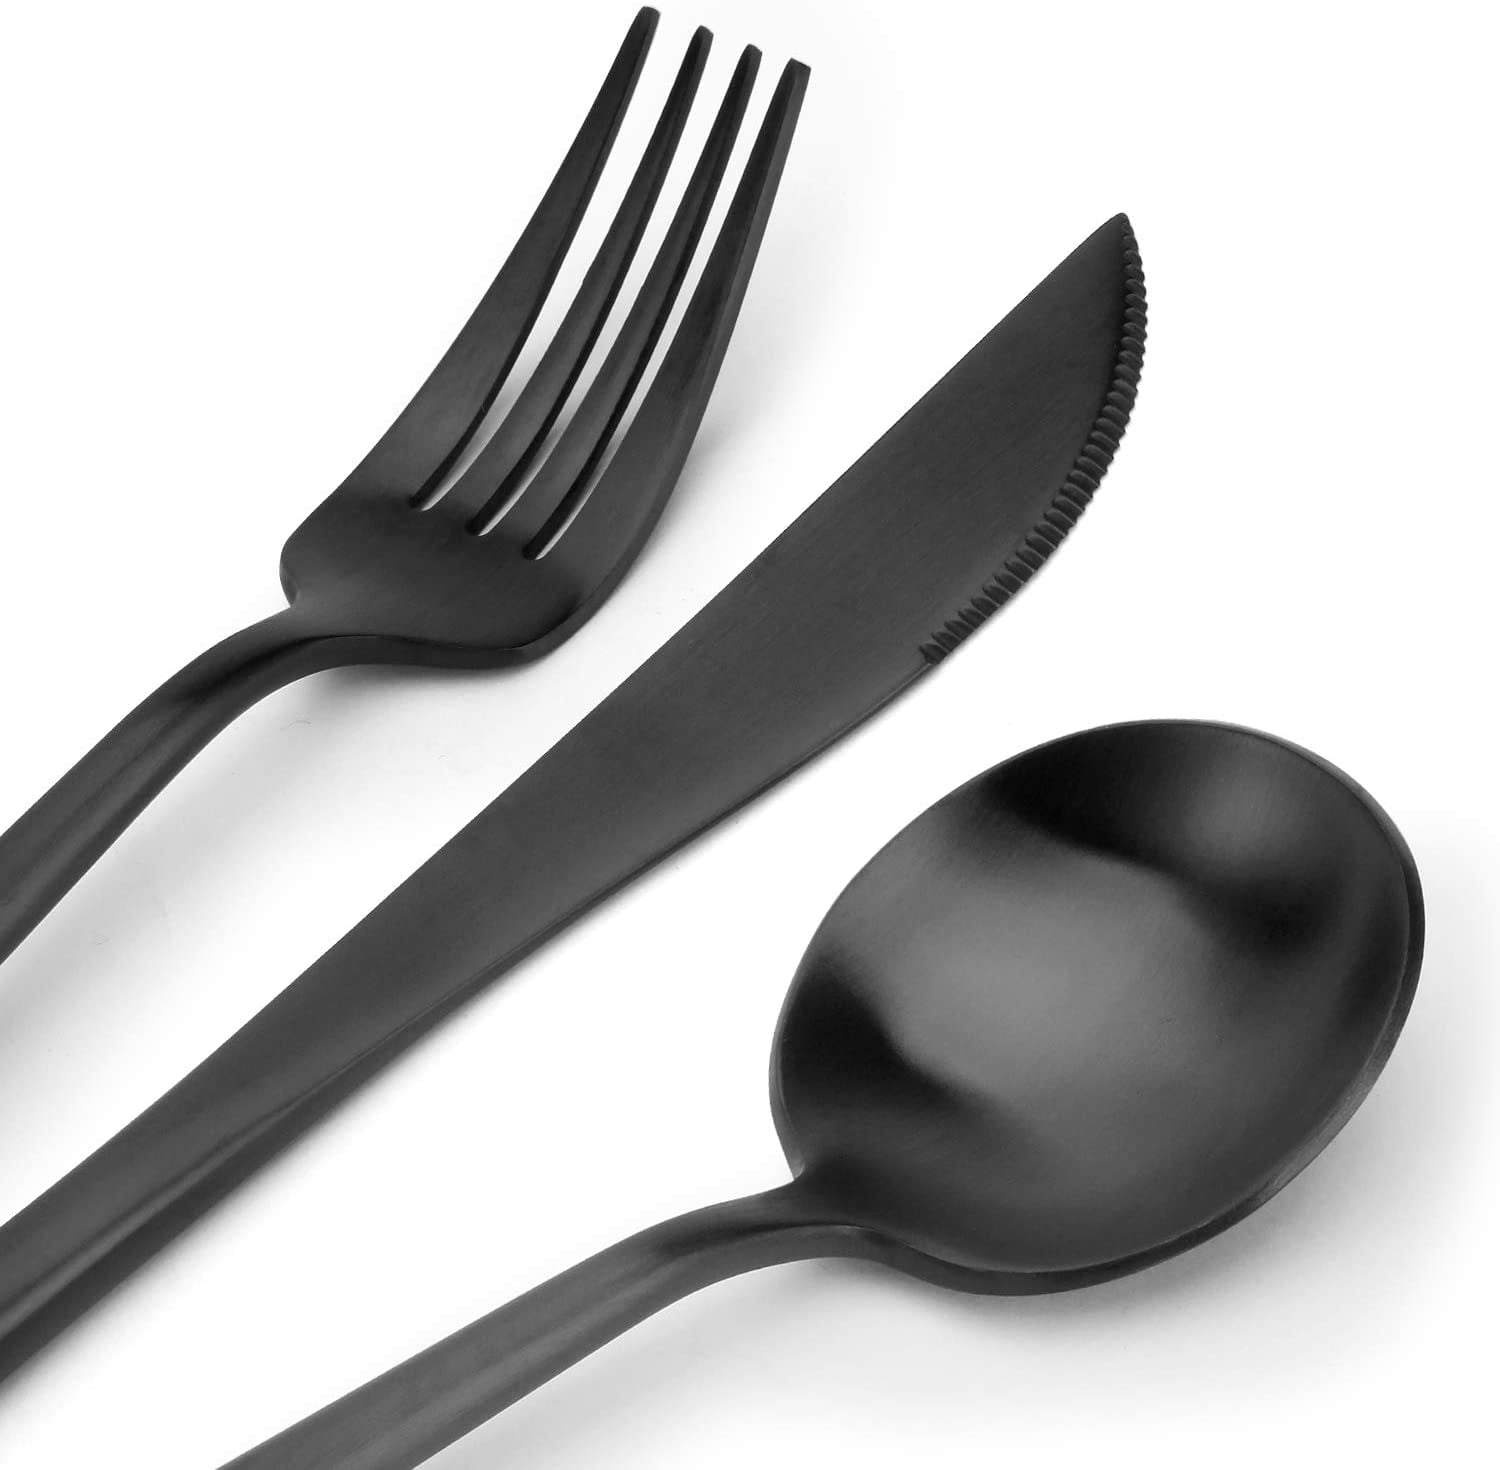 Matte Black Silverware Set Stainless Steel Satin Finish Flatware Cutlery Set  Service for 4, Dishwasher Safe (Matte Black, 20 P) - Bed Bath & Beyond -  33136063